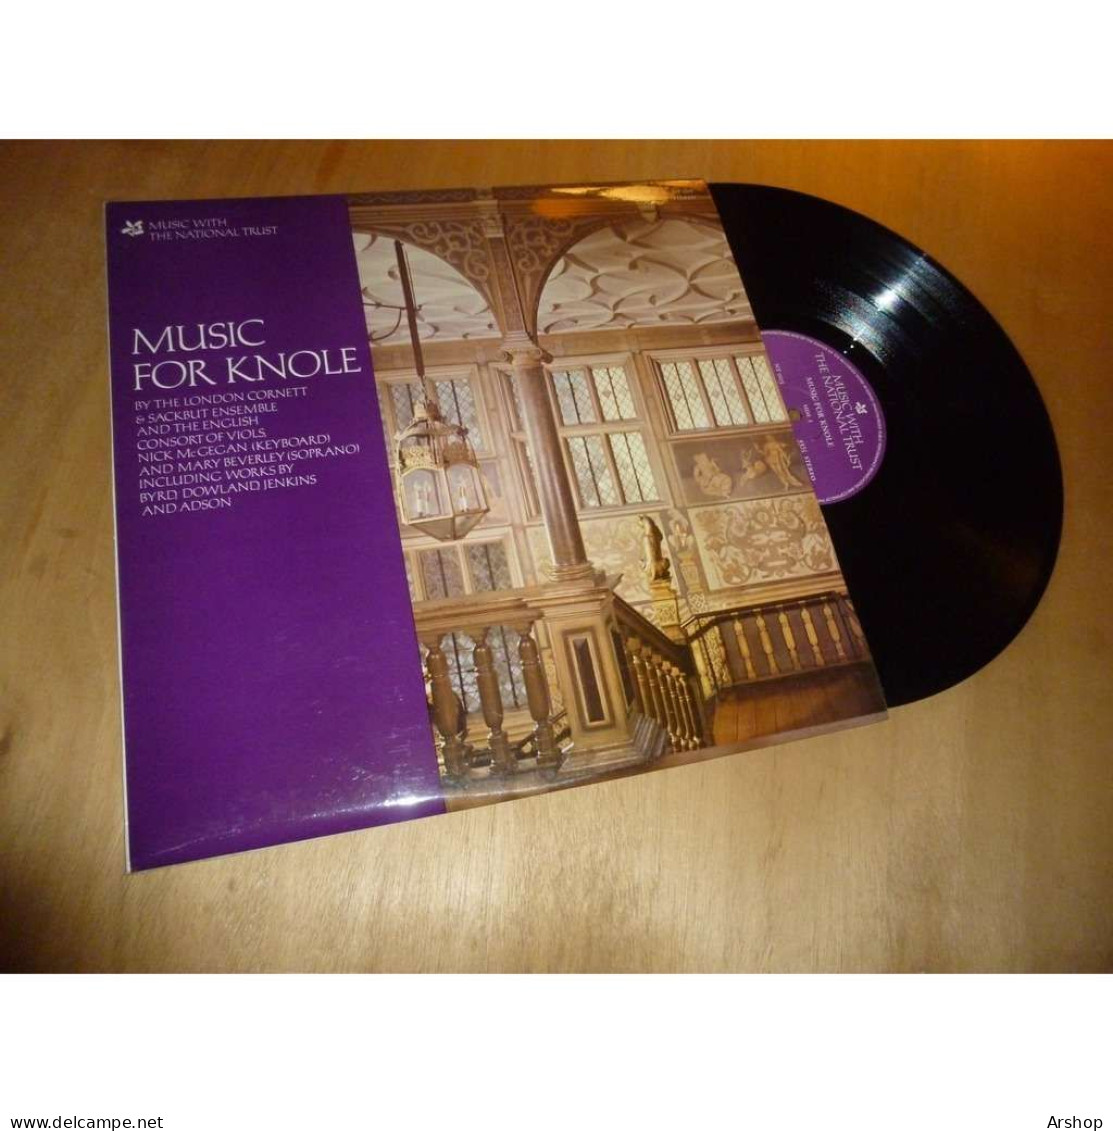 LONDON CORNETT & SACKBUT ENSEMBLE - MARY BEVERLEY Music For Knole MUSIC WITH THE NATIONAL TRUST - UK 1977 - Clásica